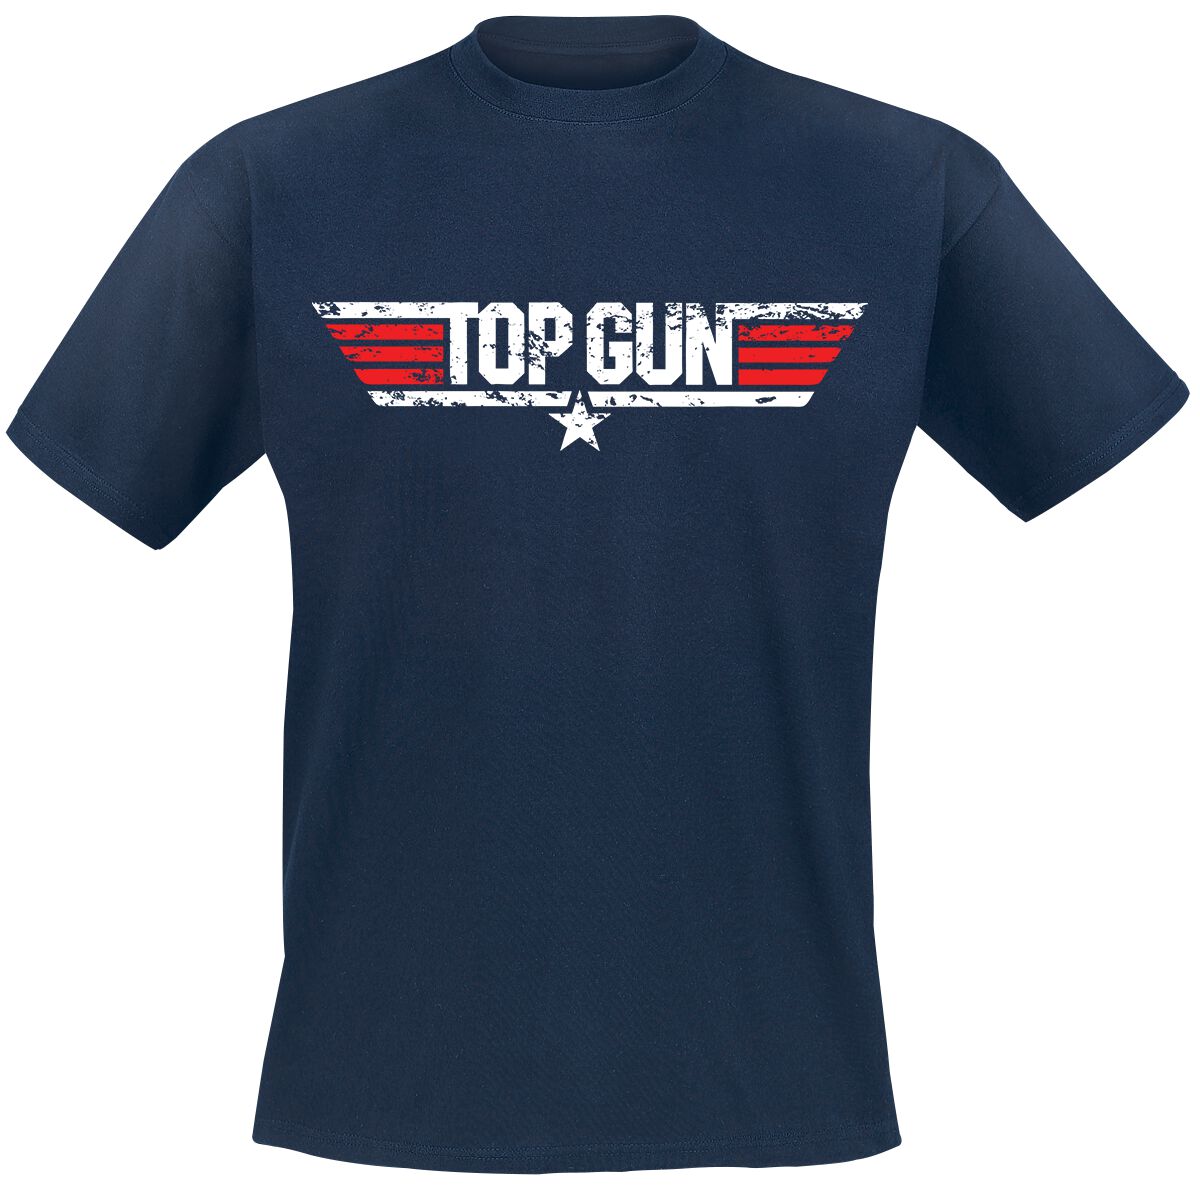 Top Gun Distressed Logo T-Shirt navy in L